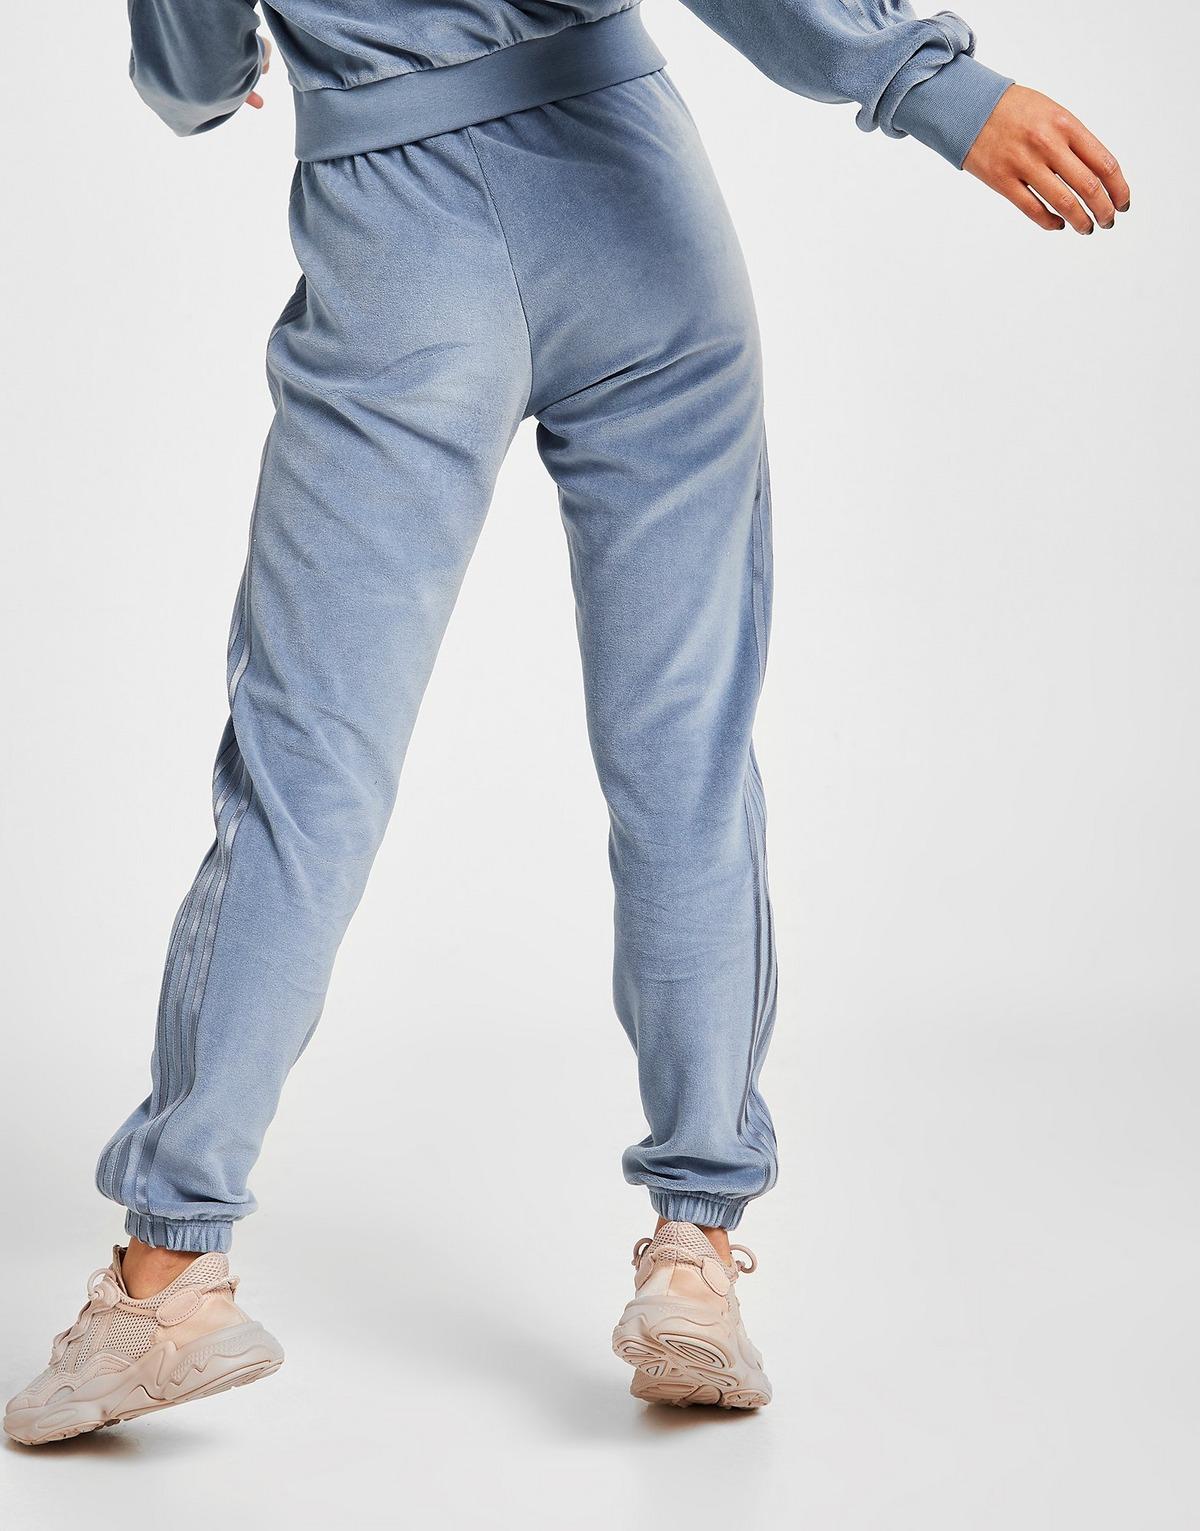 adidas Originals Cotton 3-stripes Velour Slim Joggers in Blue - Lyst